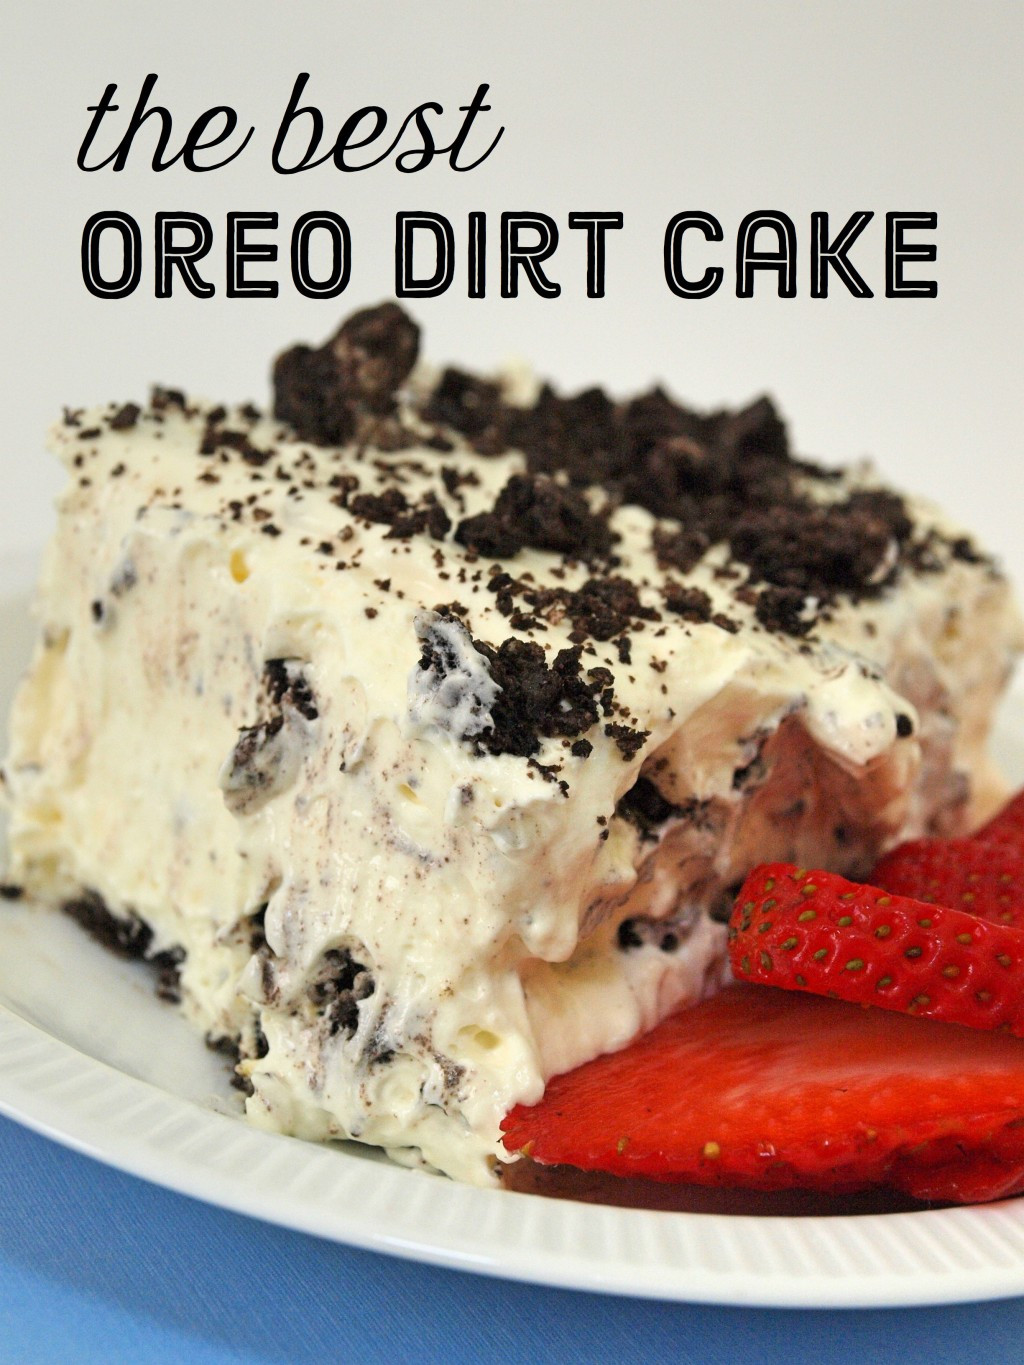 Oreo Dirt Cake Recipe
 How to Make the Best Oreo Dirt Cake